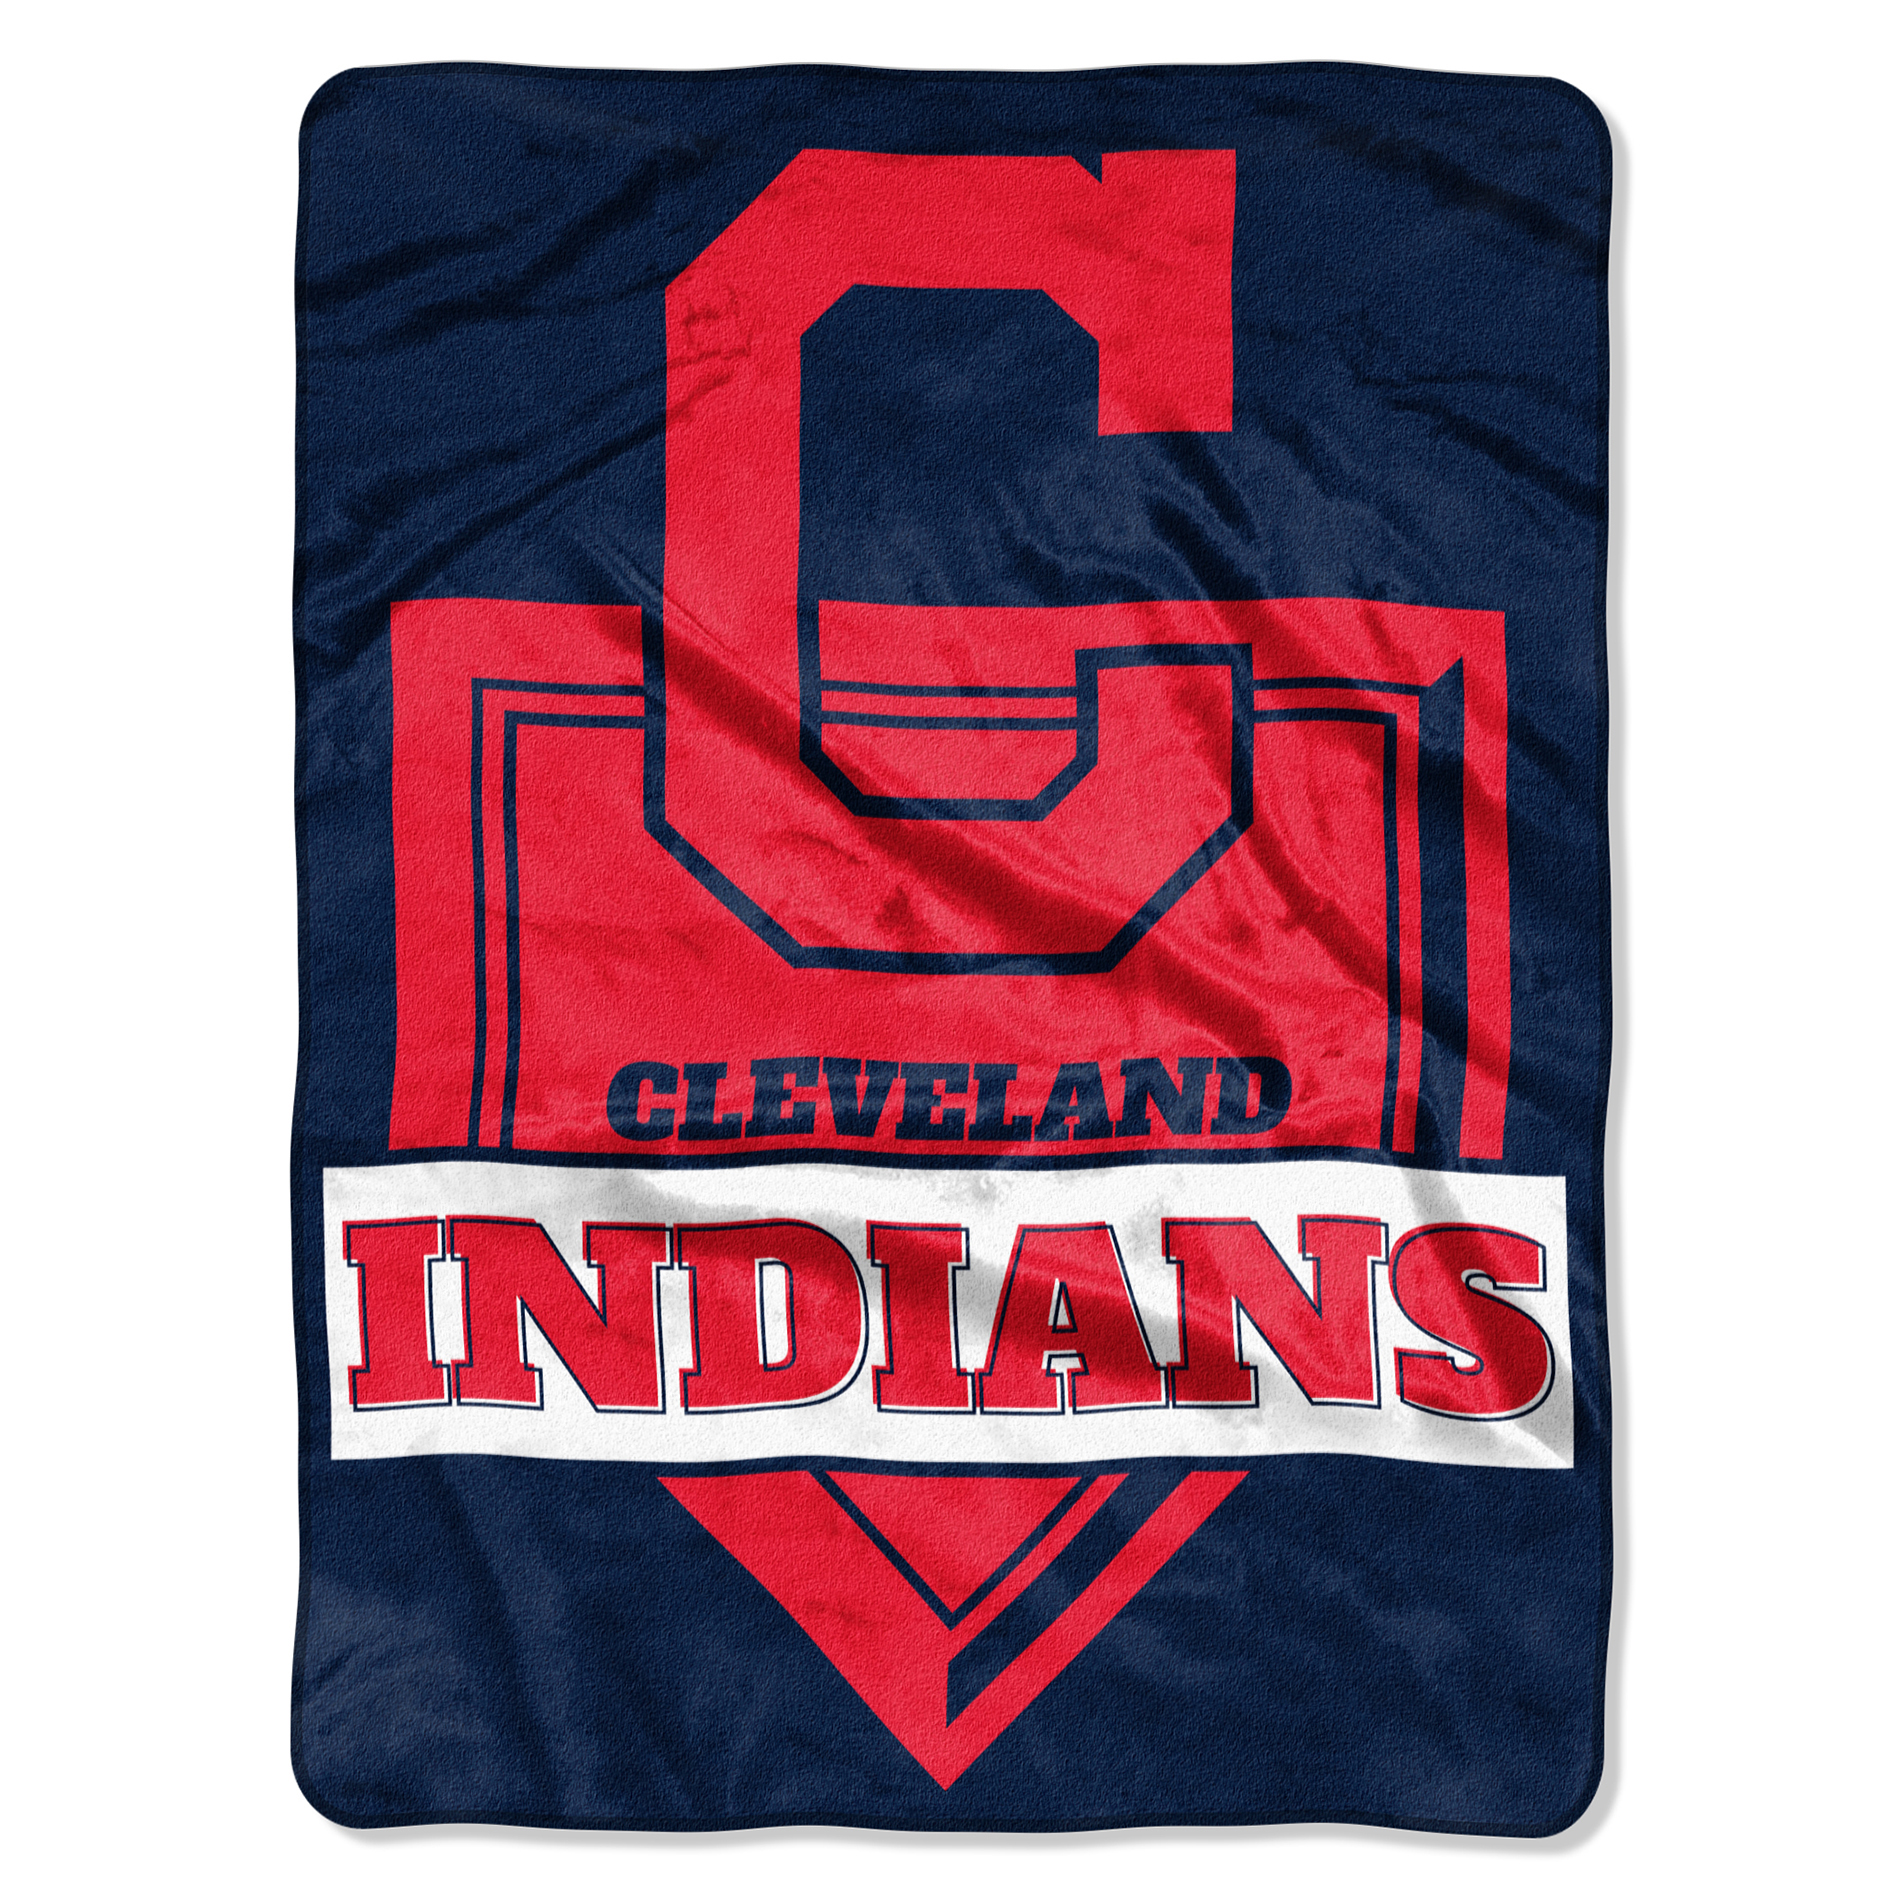 MLB Royal Plush Throw Blanket - Cleveland Indians